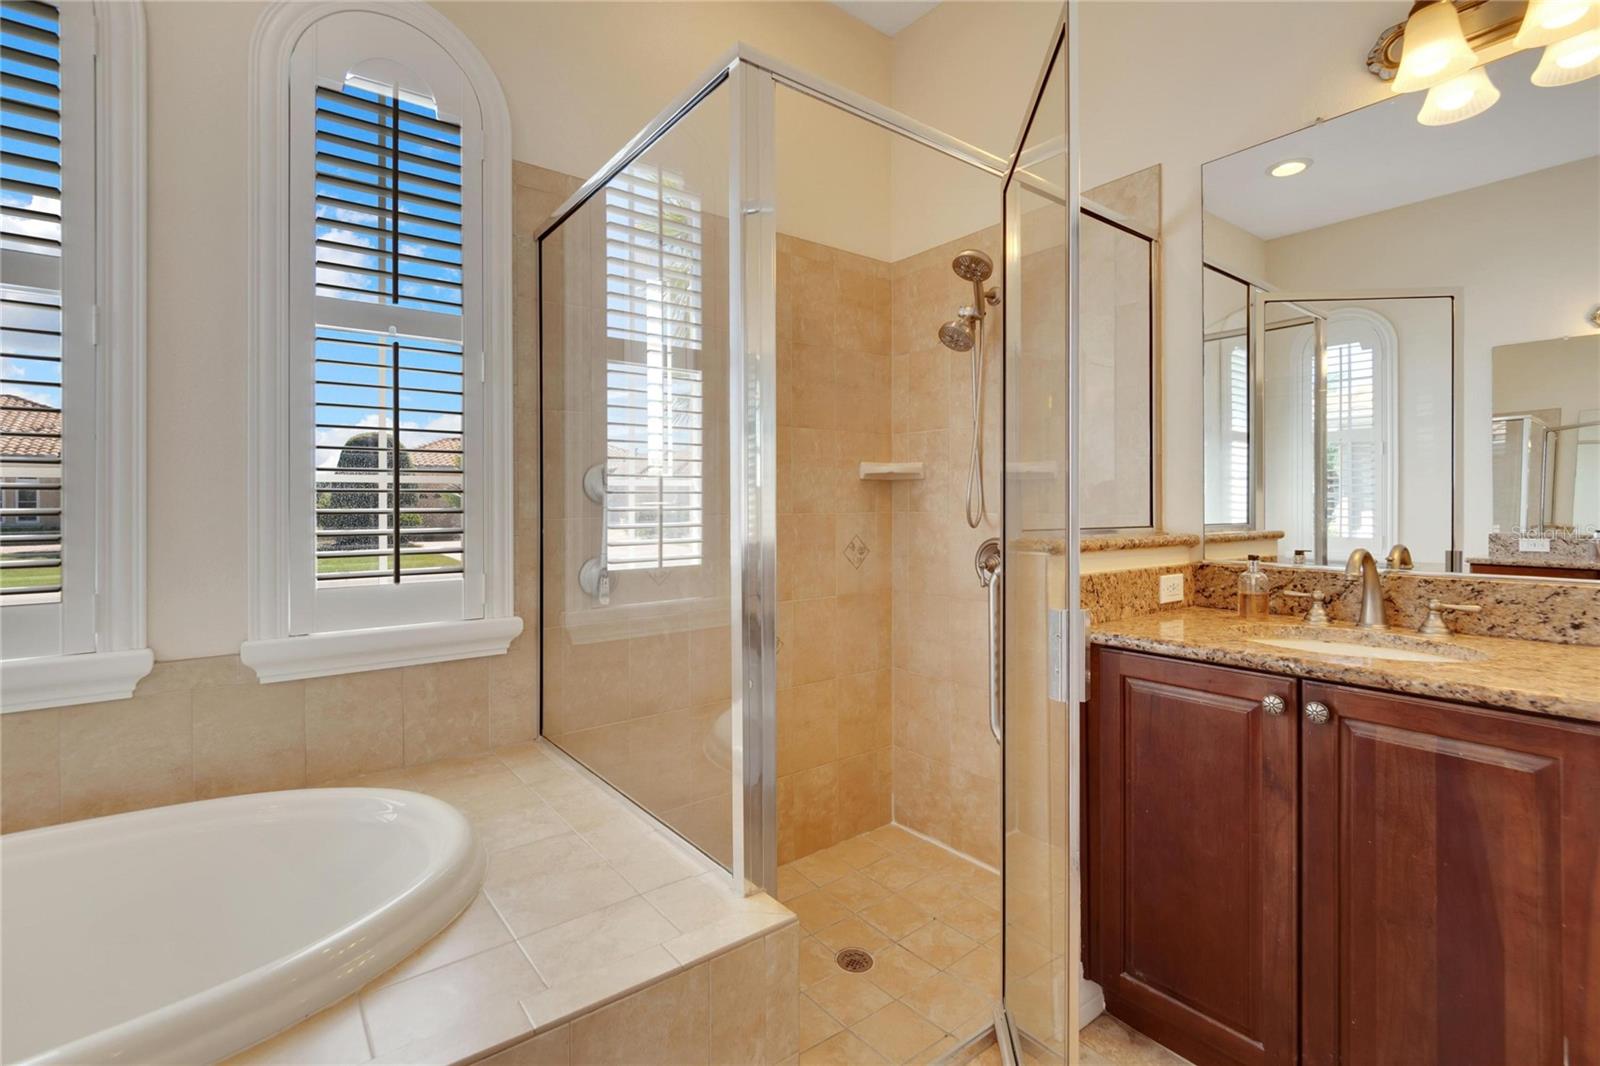 Separate shower or a nice long soak? Granite counter tops and split vanities.